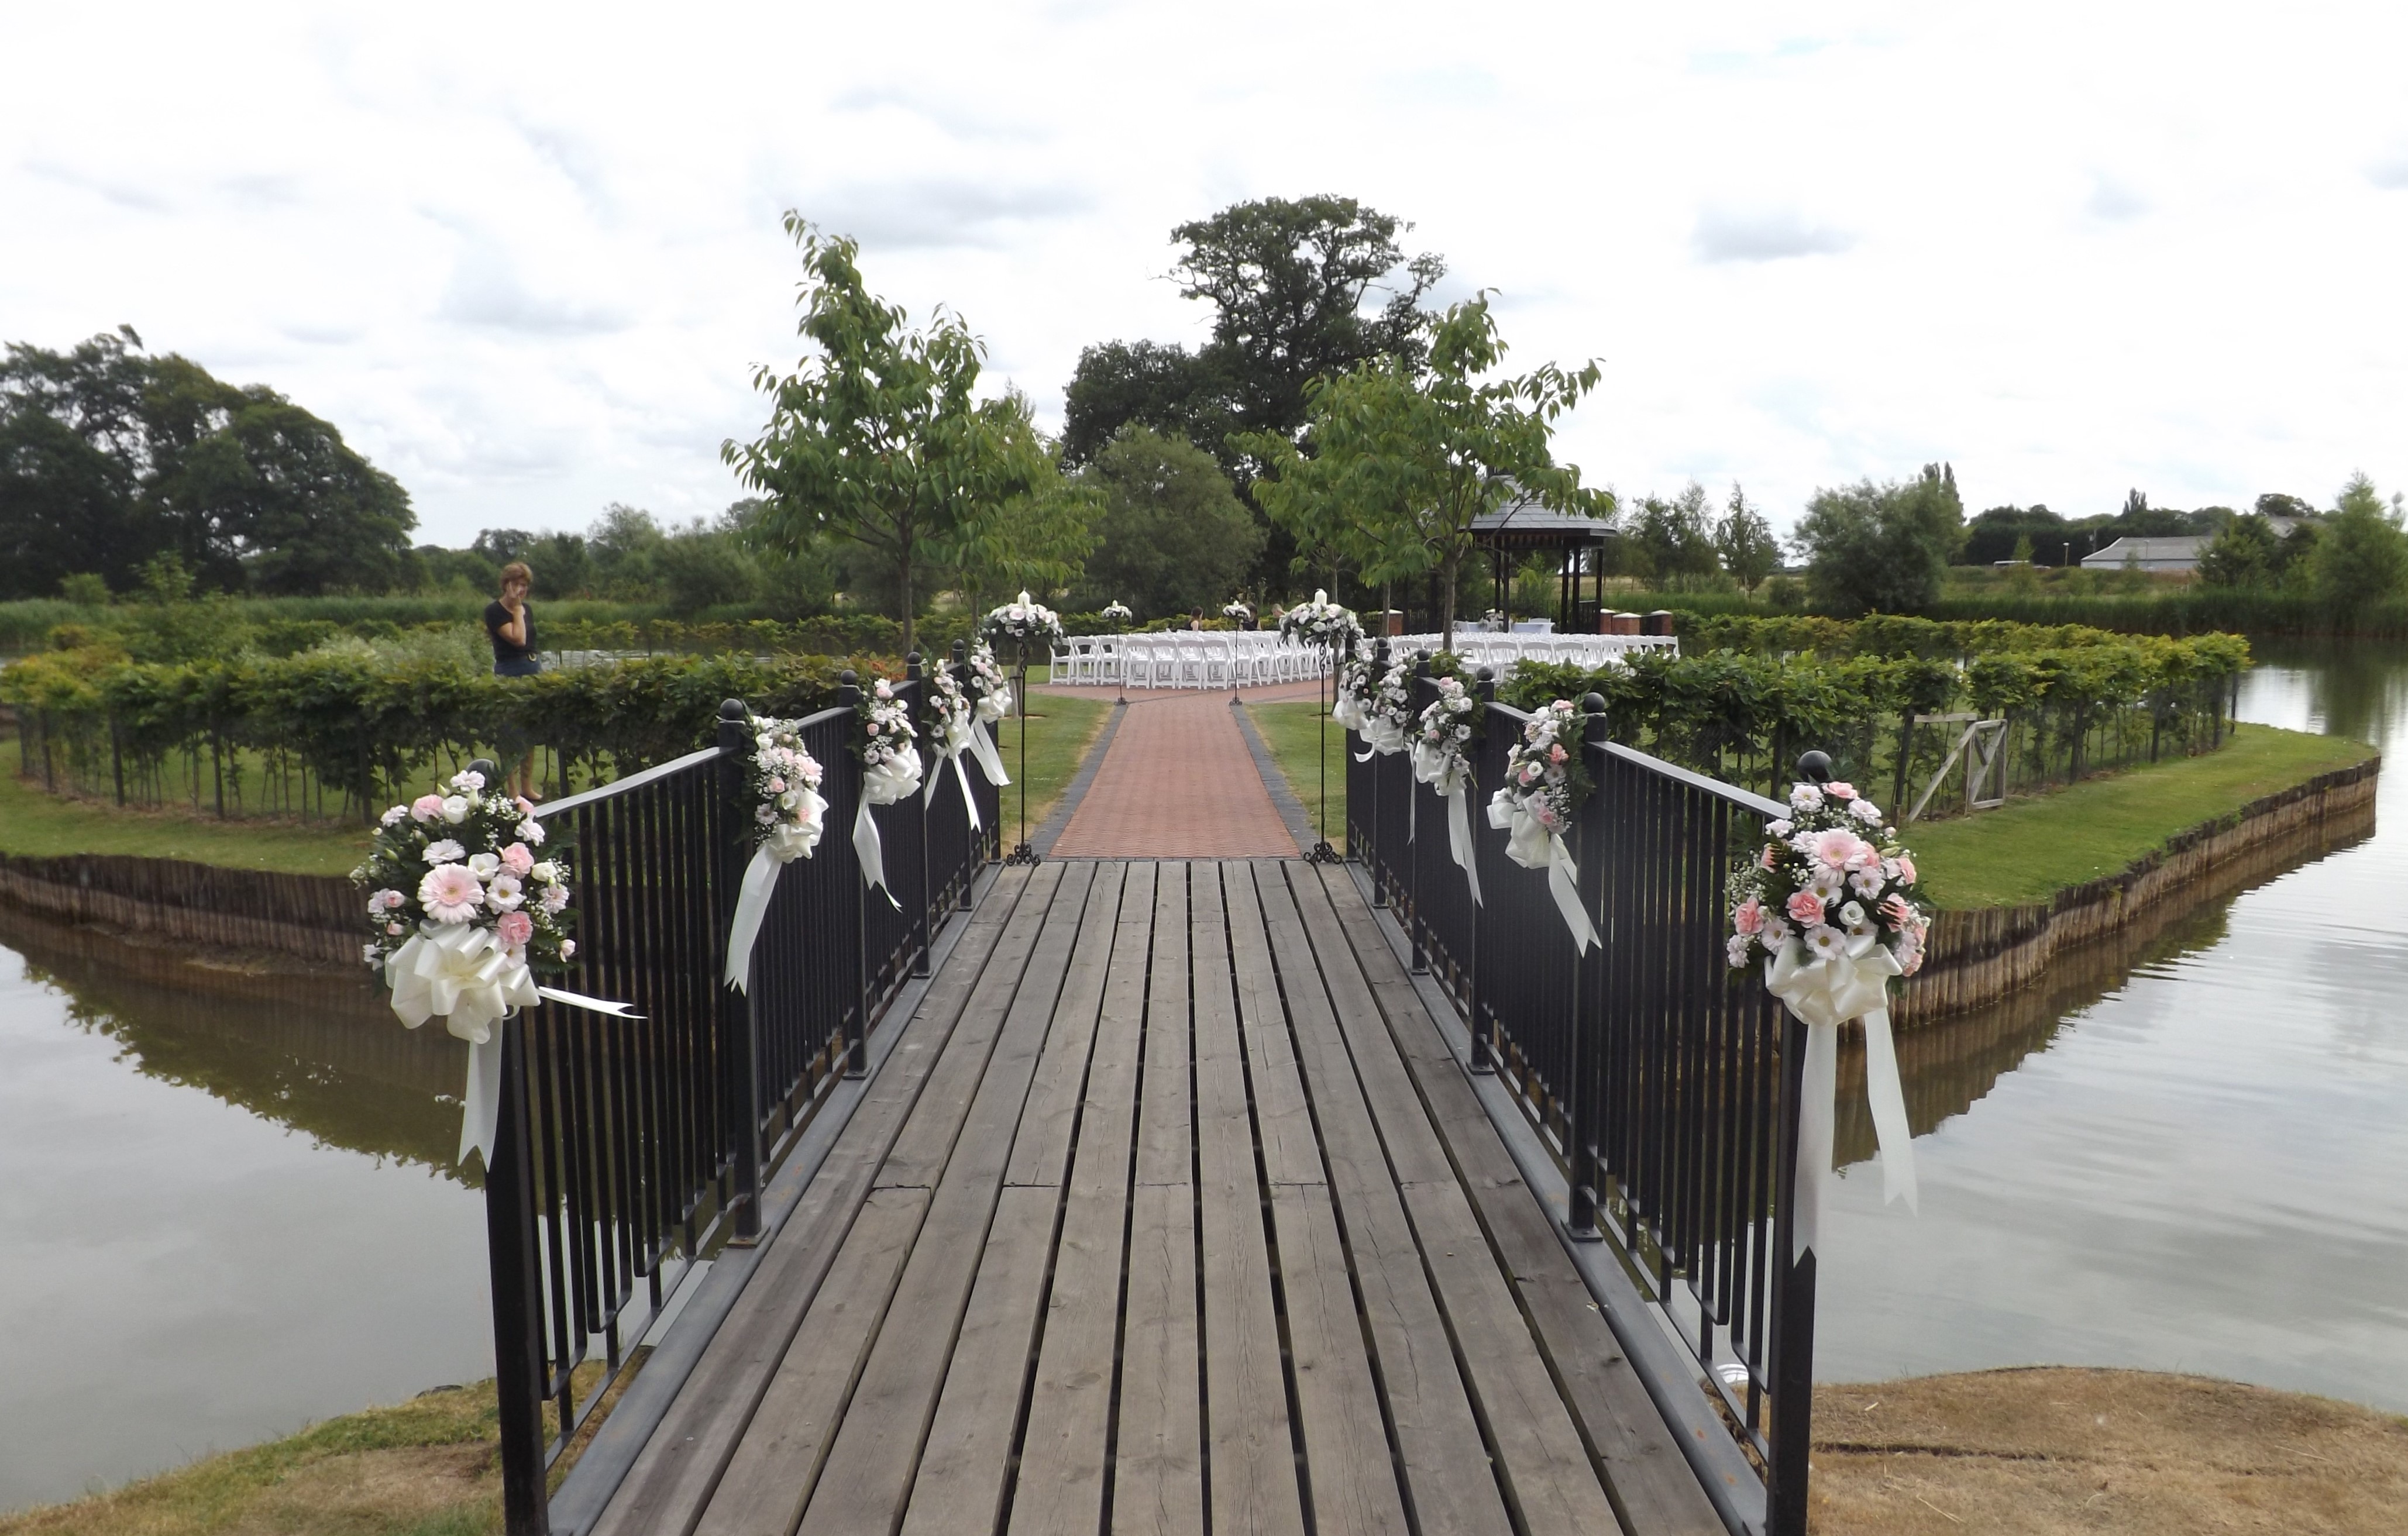 pink & white pew end & bows over bridge ardencote manor